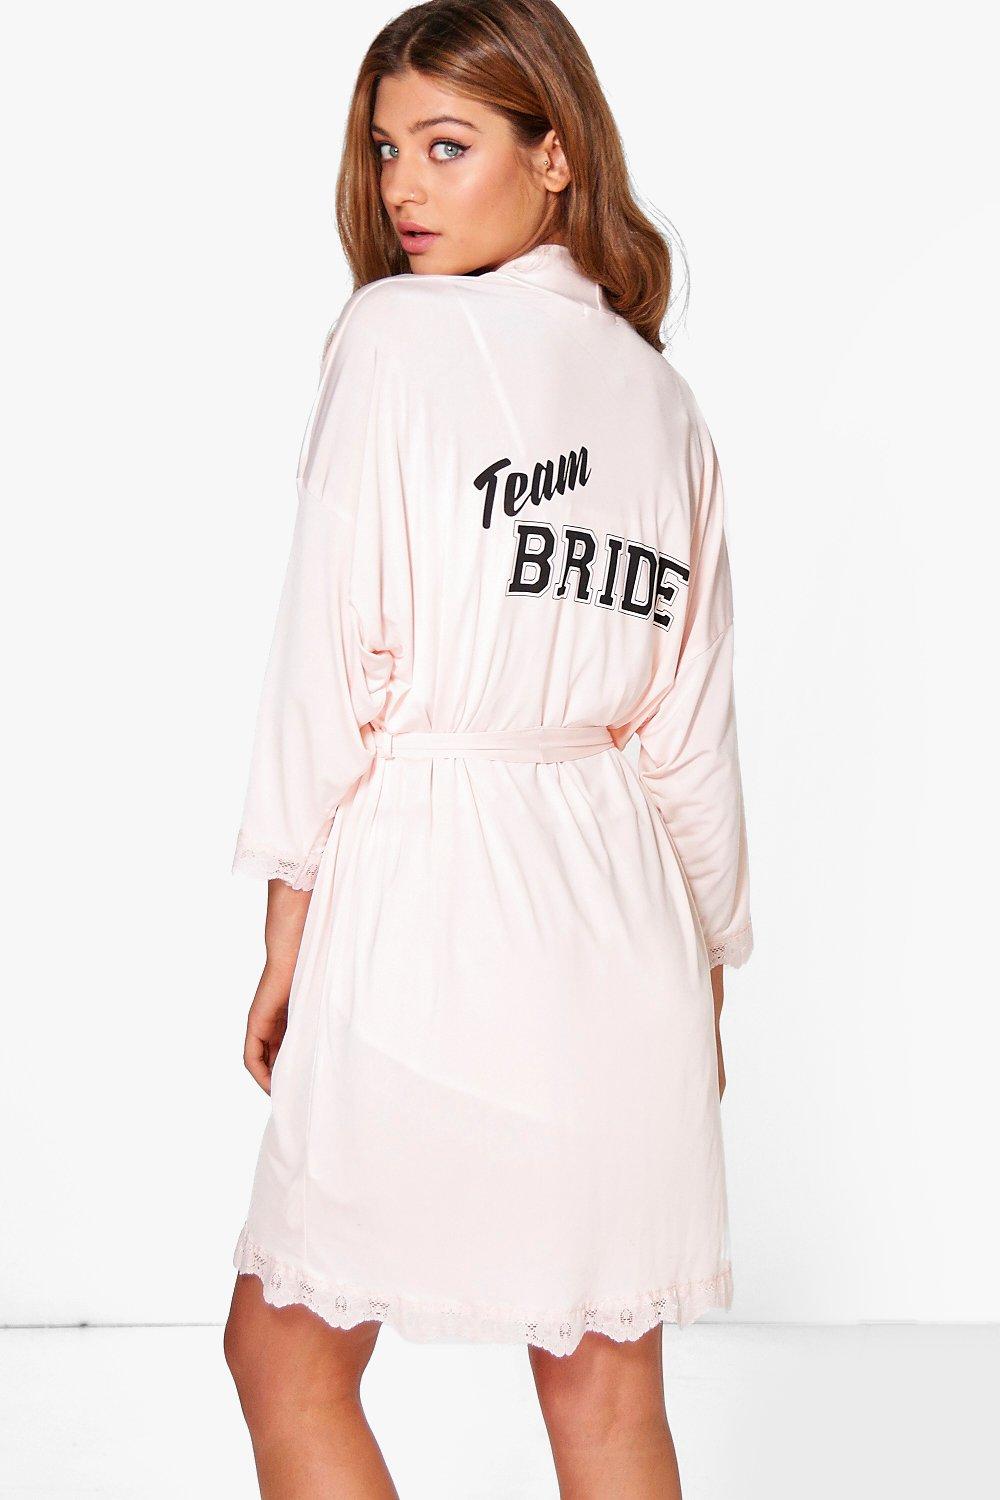 team bride dressing gown